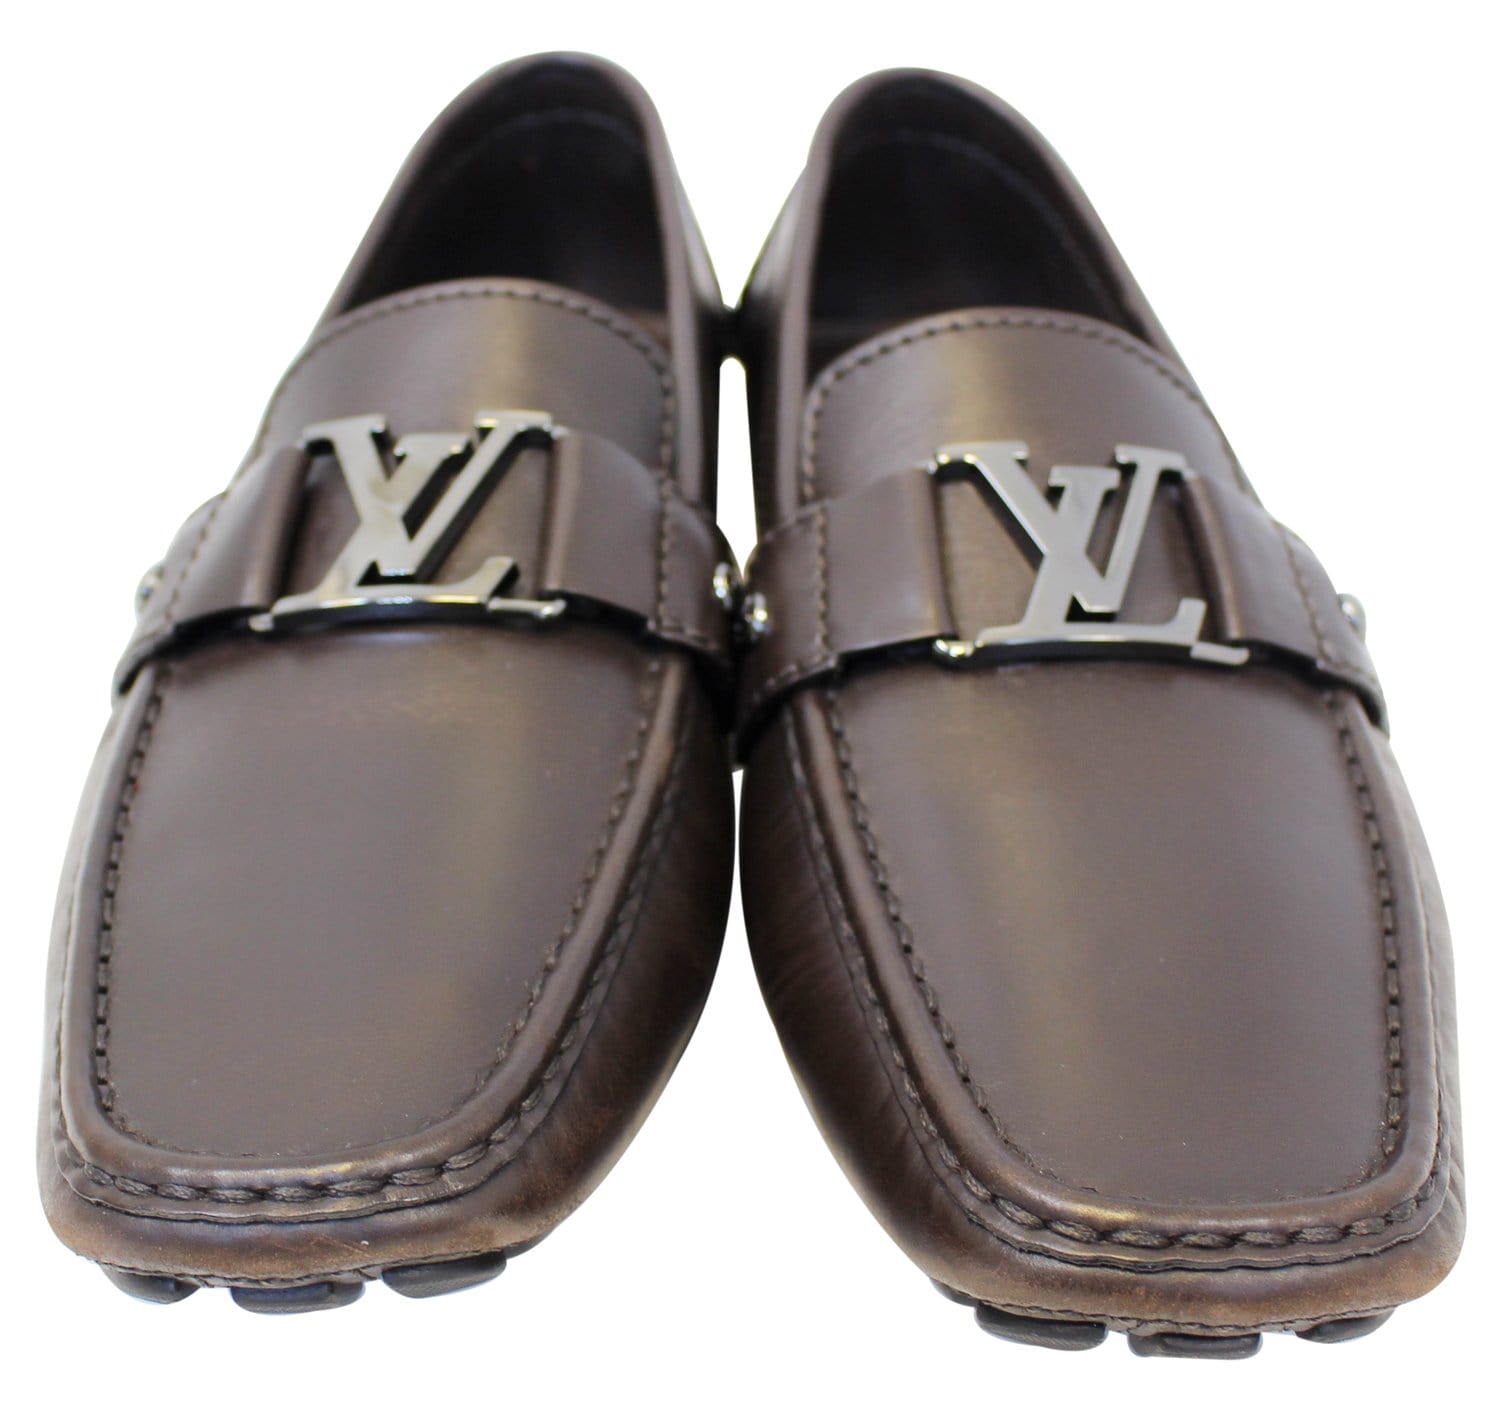 Louis Vuitton, Shoes, Brown And Black Lv Shoes